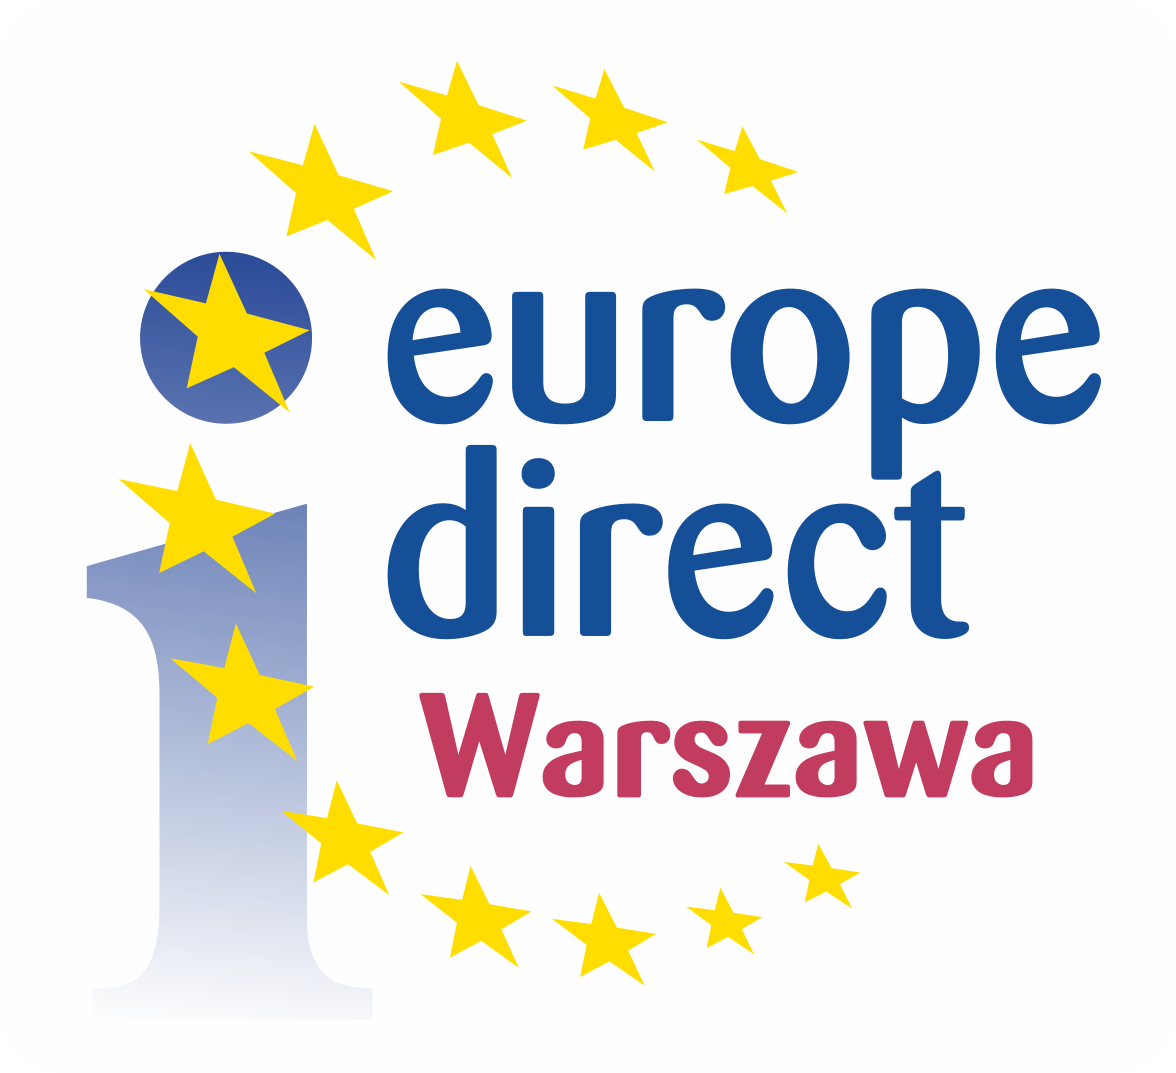 logo europedirect